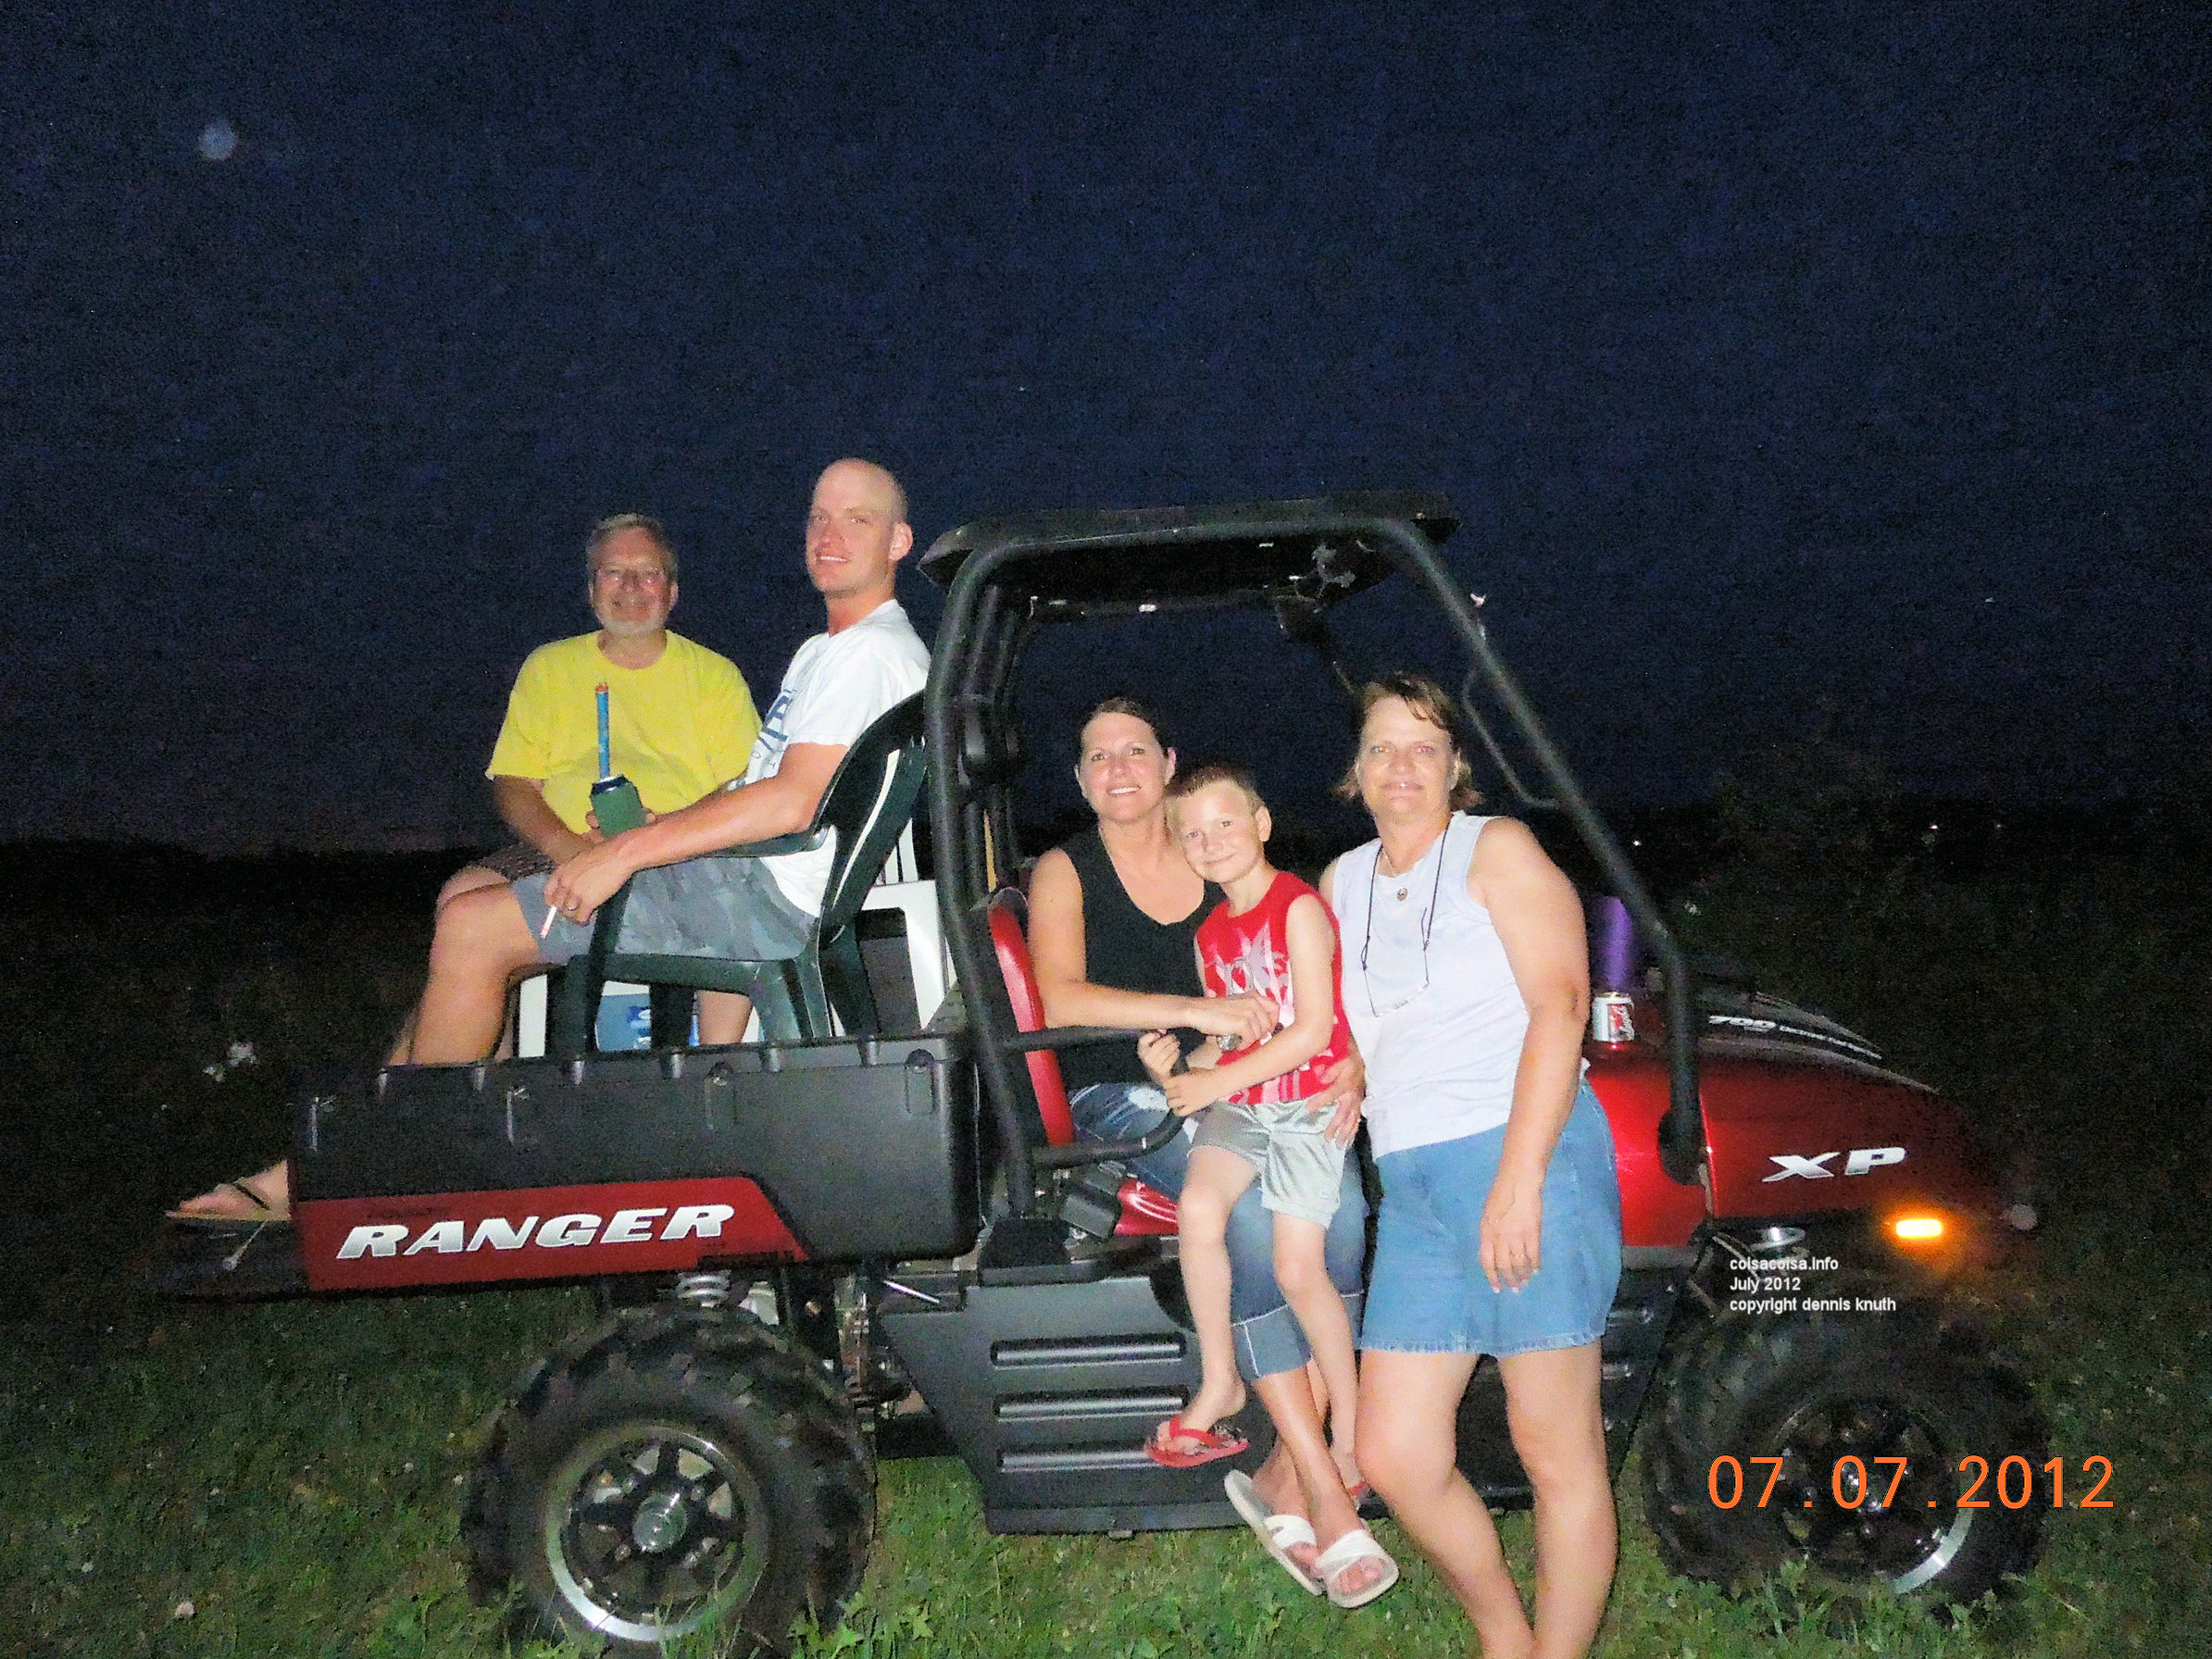 Ranger Riding at Night on July 7